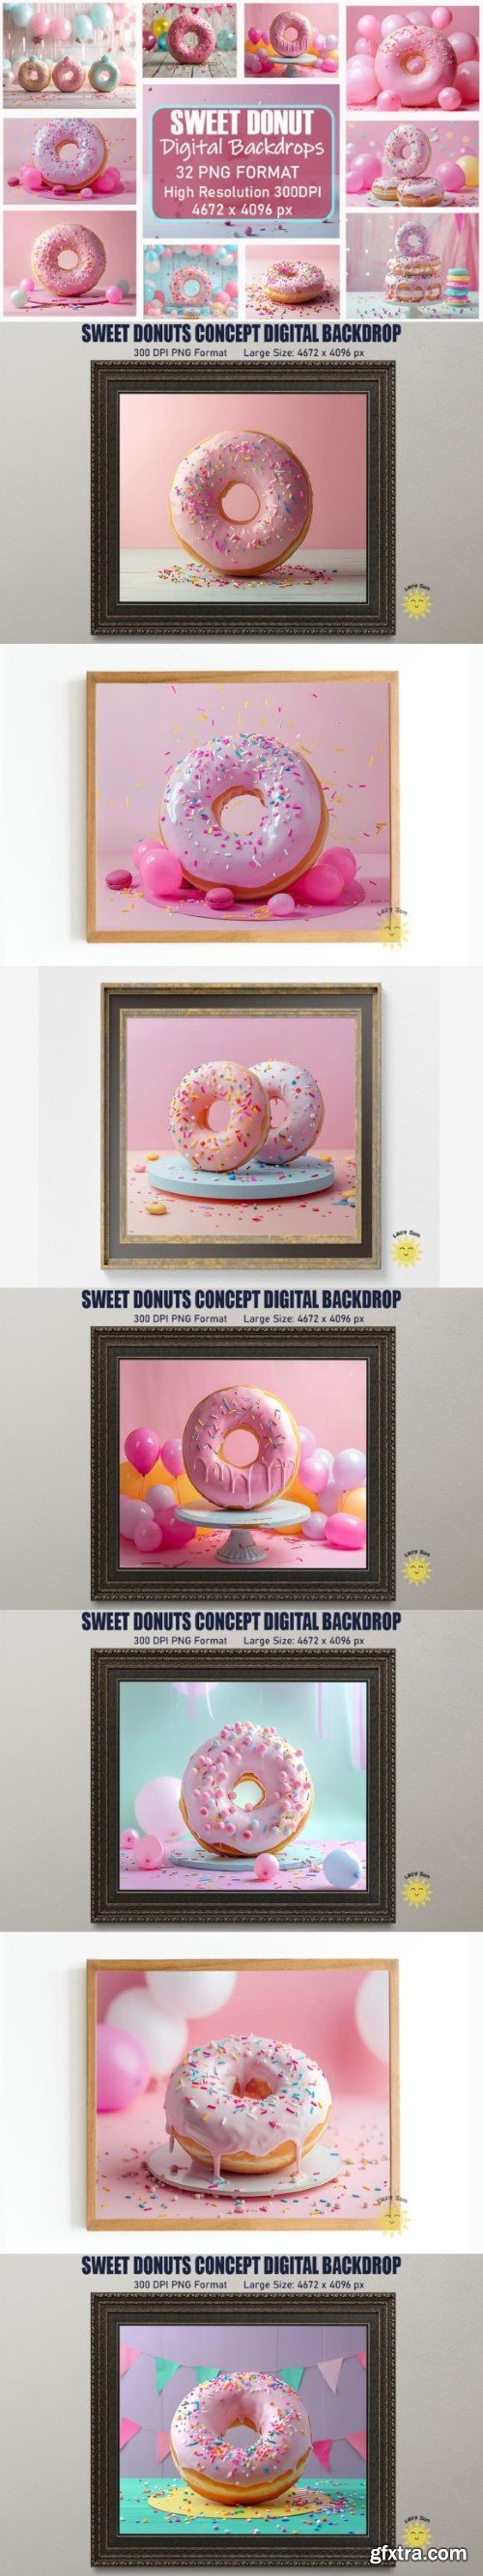 Sweet Donuts Concept Digital Backdrops